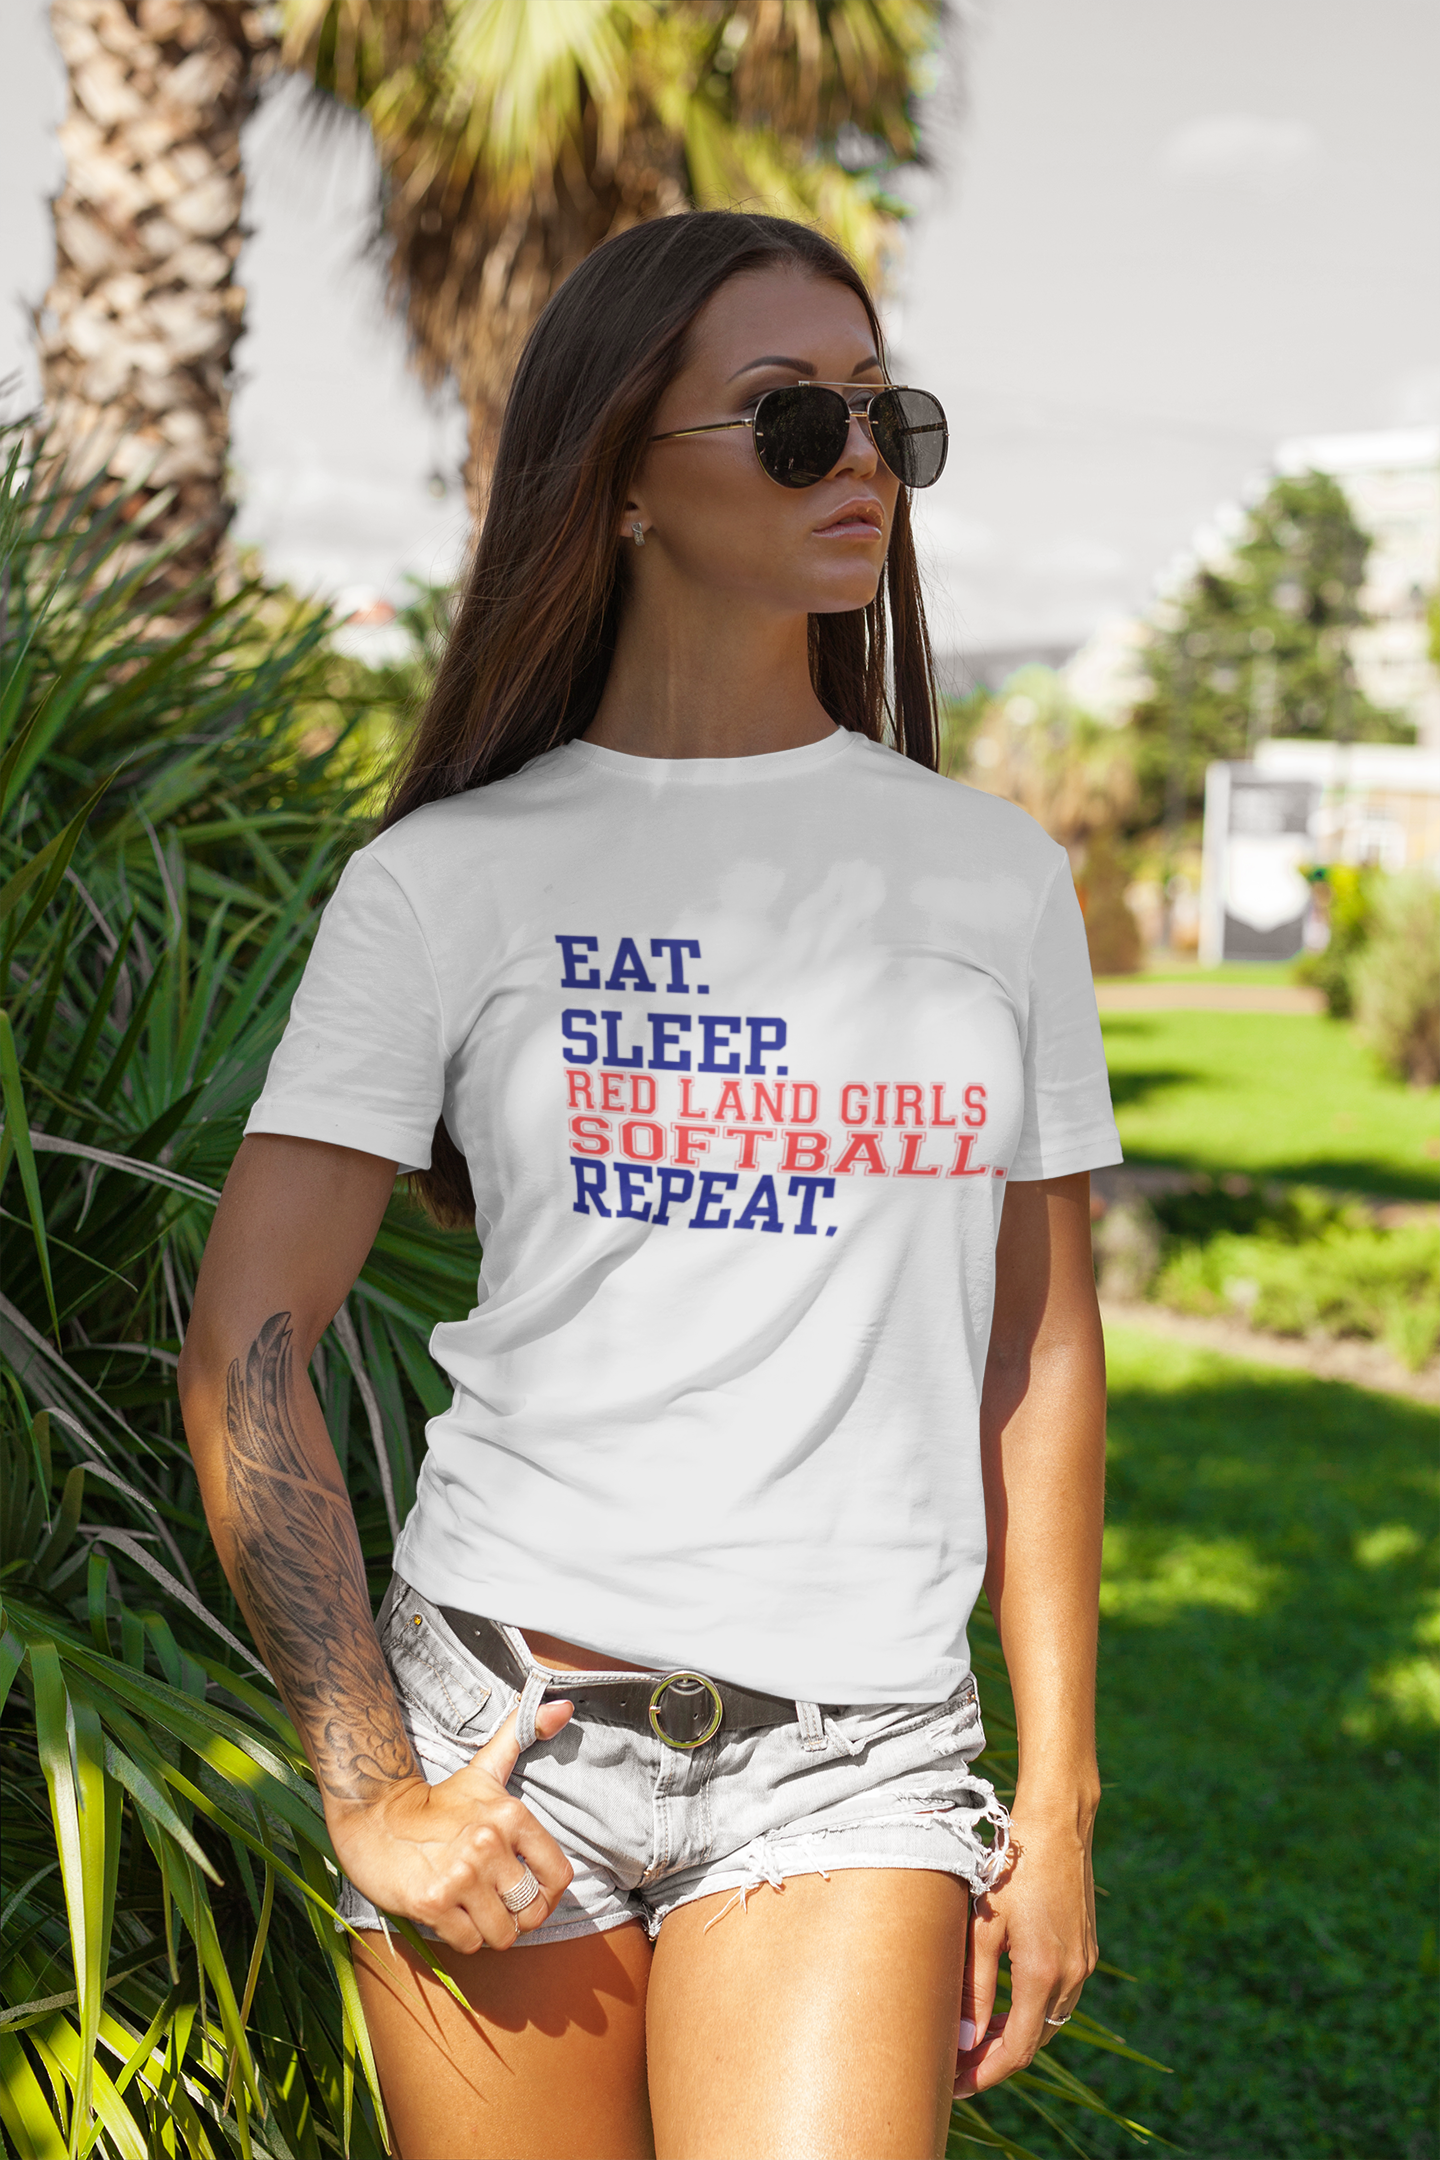 Eat. Sleep. Red Land Girls Softball. Repeat.